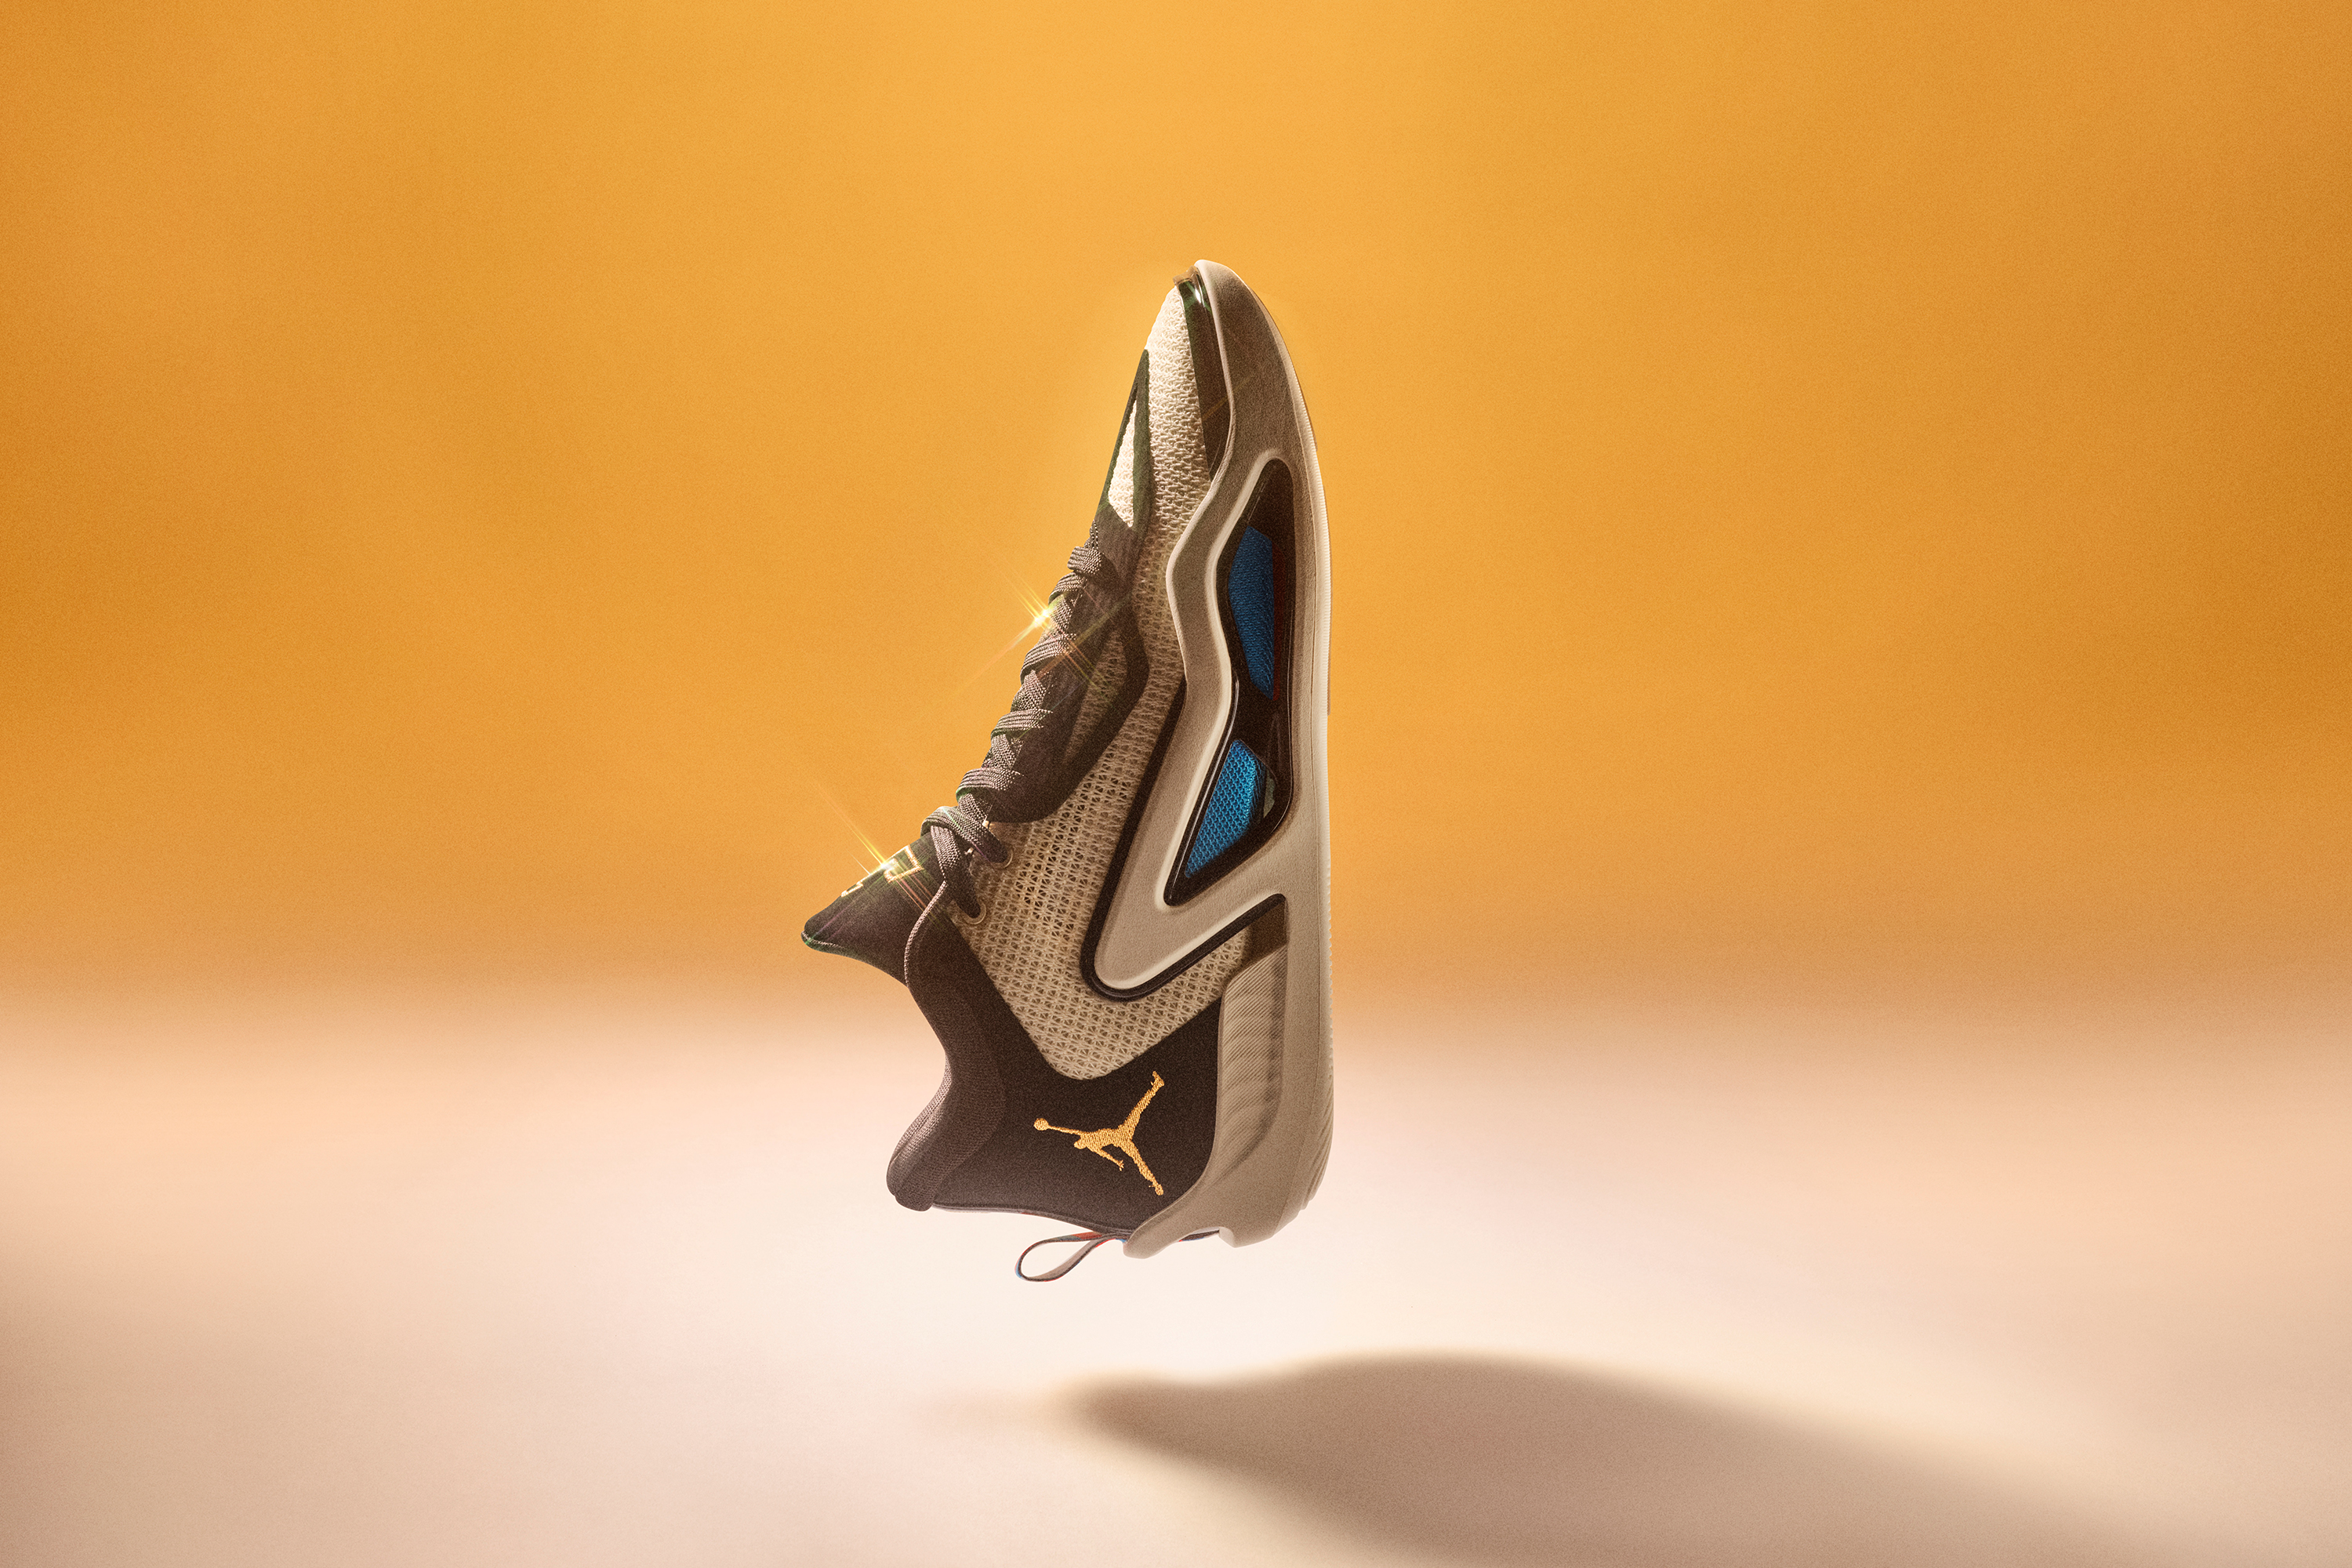 Jordan Brand Unveils Jayson Tatum's First Signature Shoe